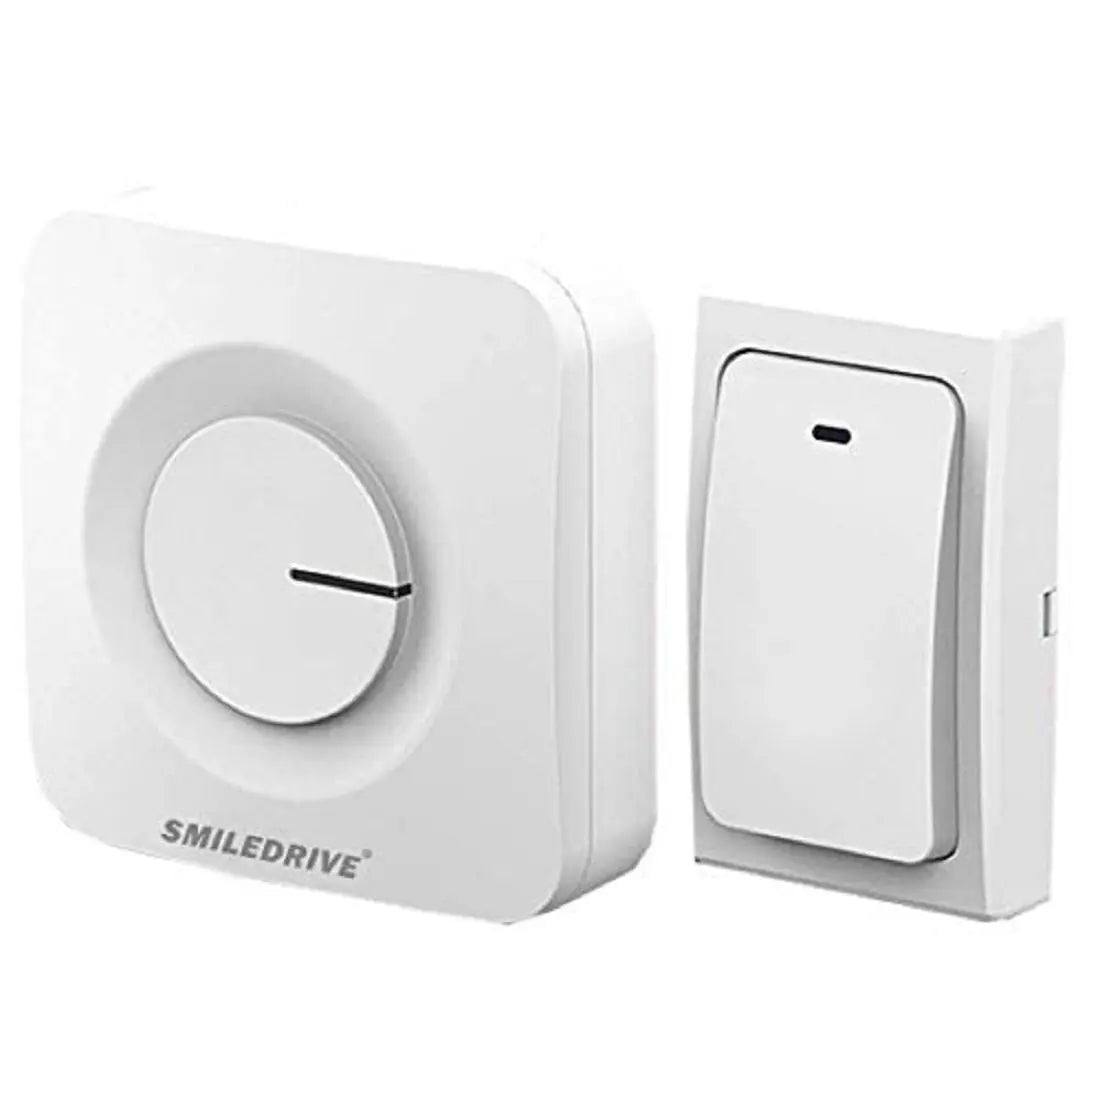 Cglfd Wireless Doorbell House Door Bell Kit 900ft Range With 38 Ringtones &  4 Level Adjust-able Volume Battery Powered